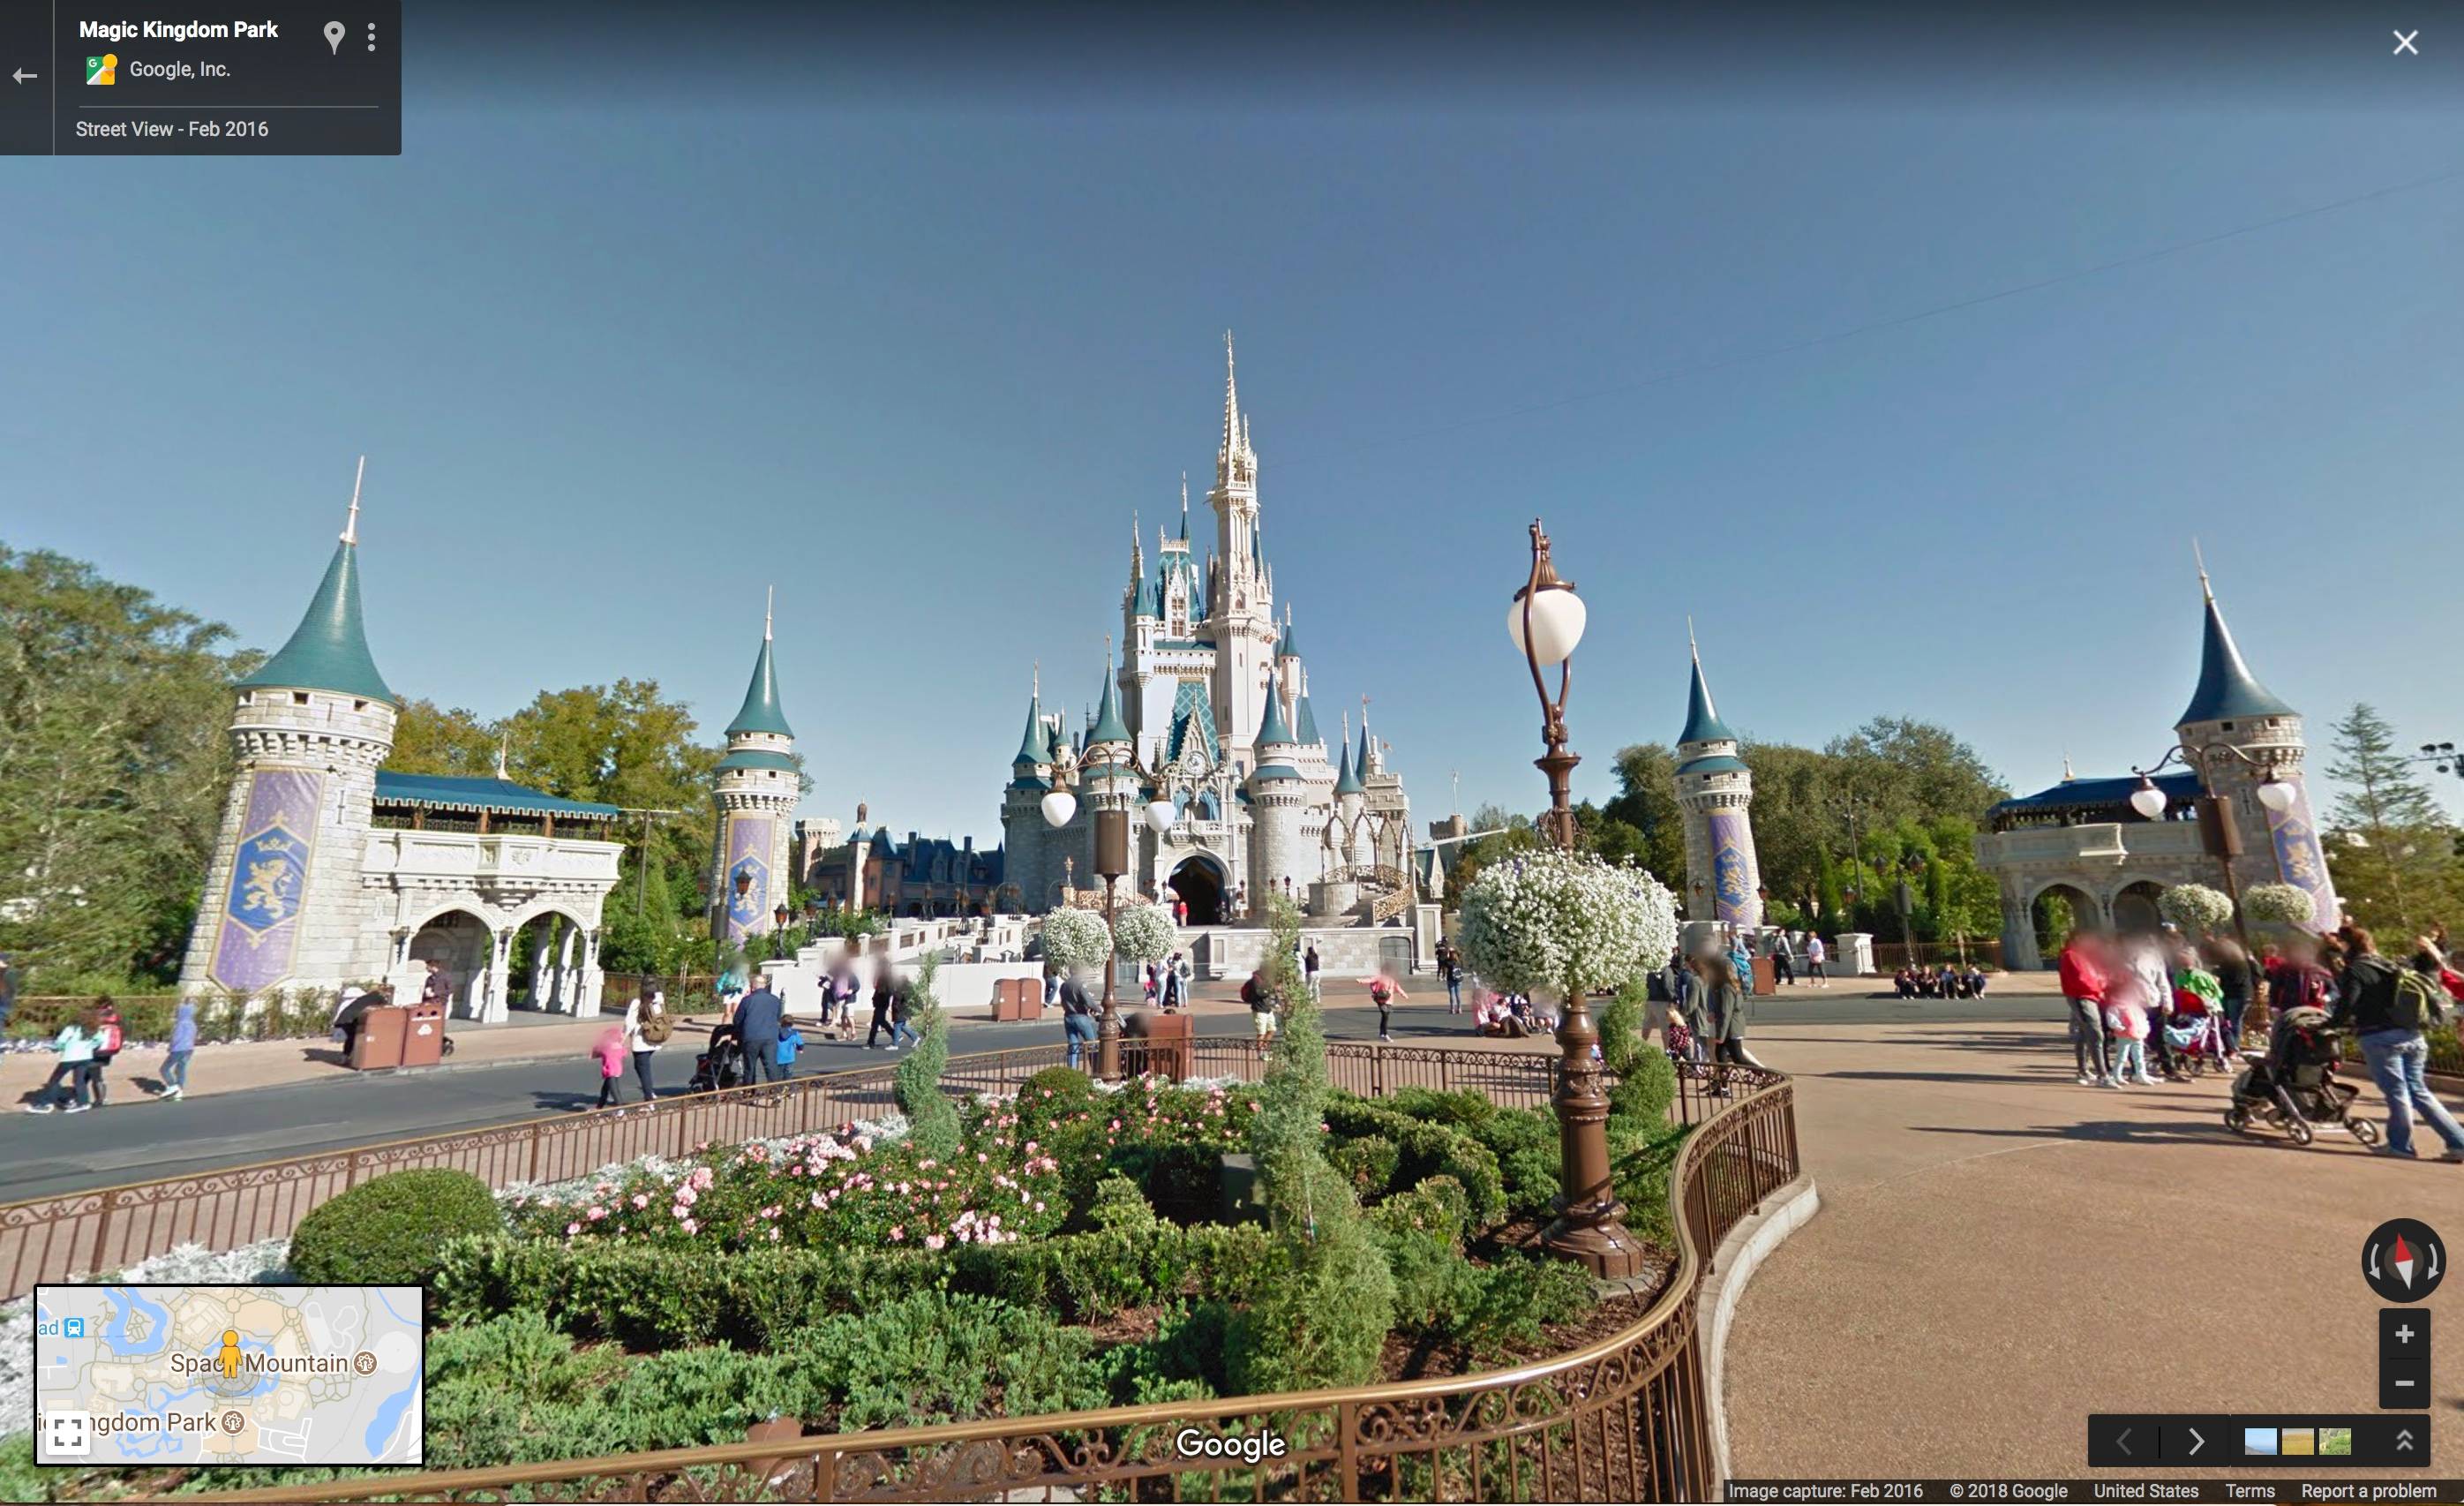 Google Maps Street View of Magic Kingdom